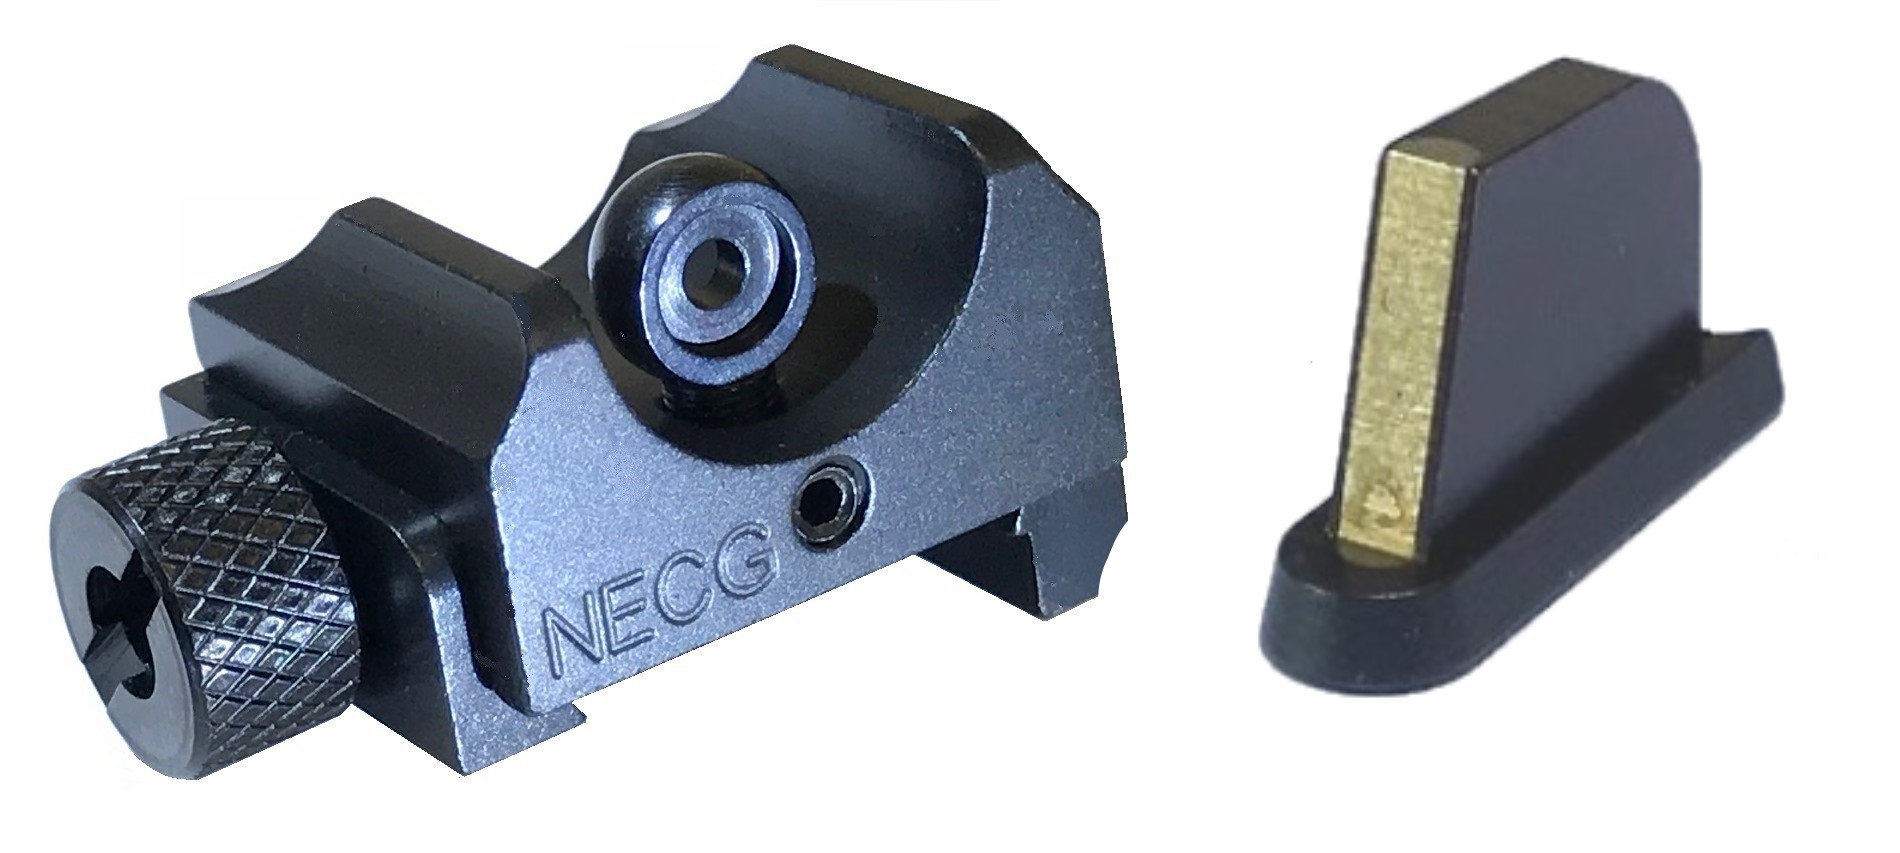 NECG CZ 550 Ghost Ring Peep & Patridge Sight Set  N-109-Set